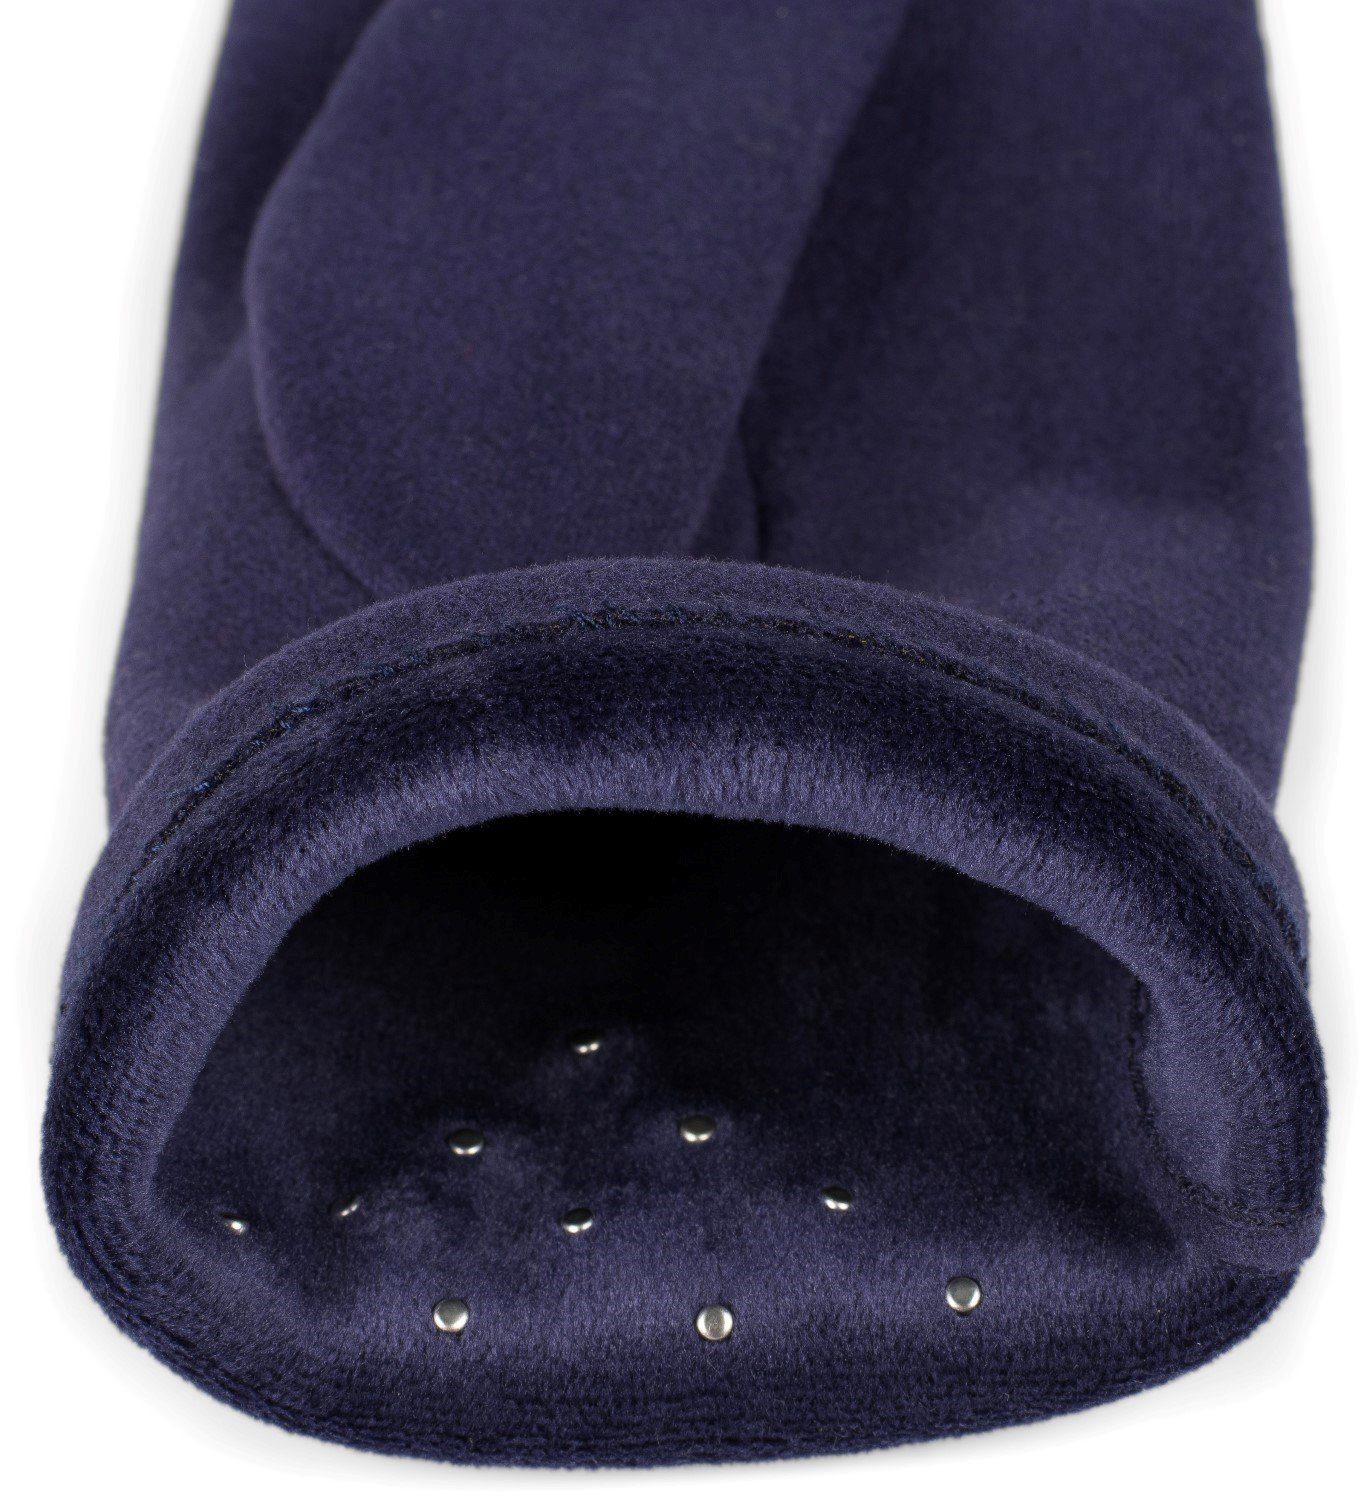 Touchscreen Dunkelblau und styleBREAKER Handschuhe Perlen mit Fleecehandschuhe Strass